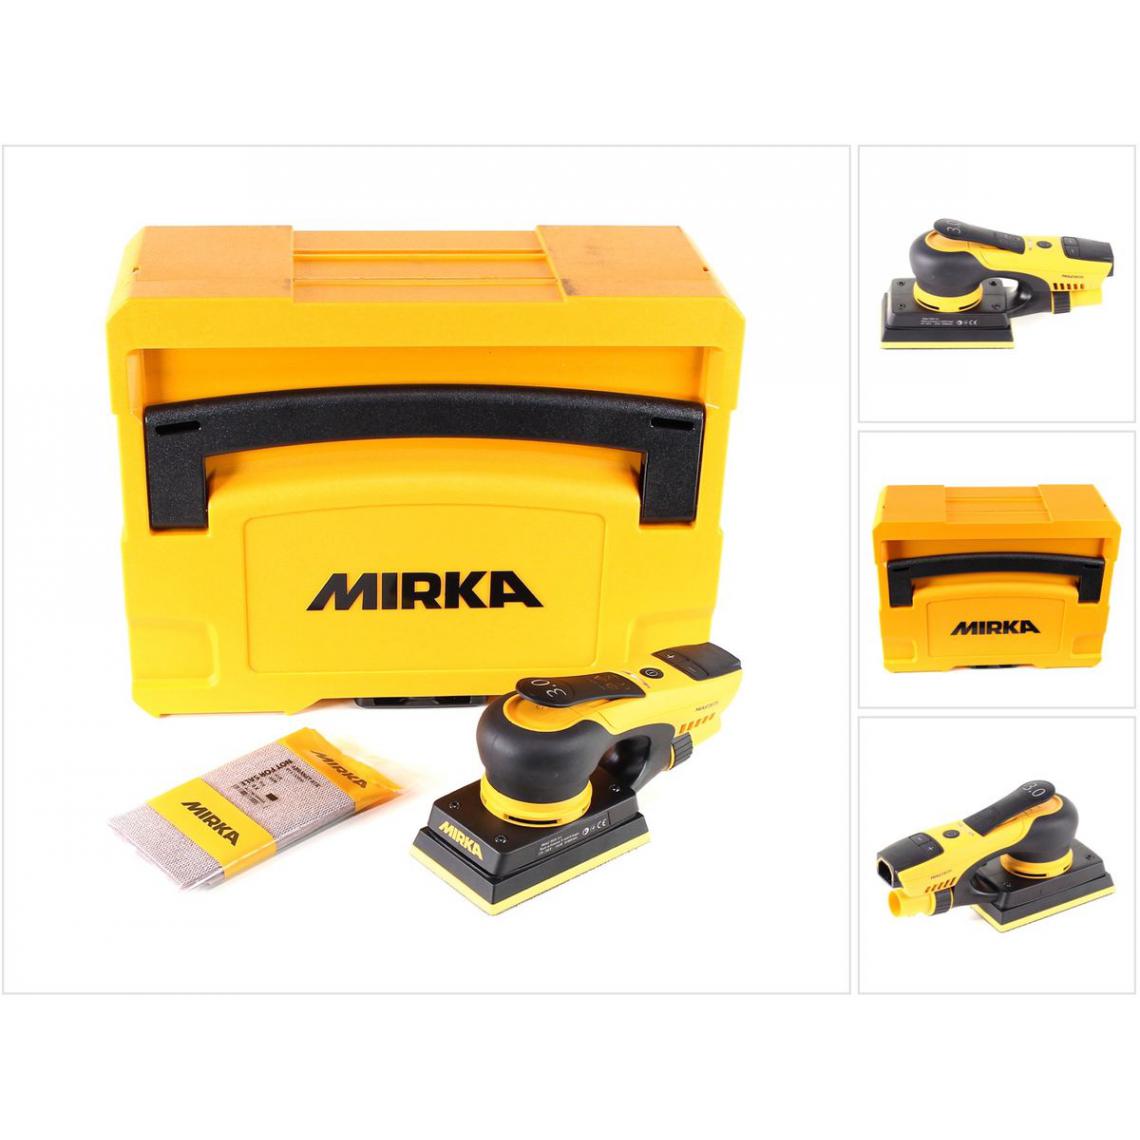 Mirka - Mirka DEOS 353 CV Ponceuse électrique rectangulaire 250W 3,0mm Hub Brushless + Coffret de transport ( MID3530201CA ) - Ponceuses vibrantes